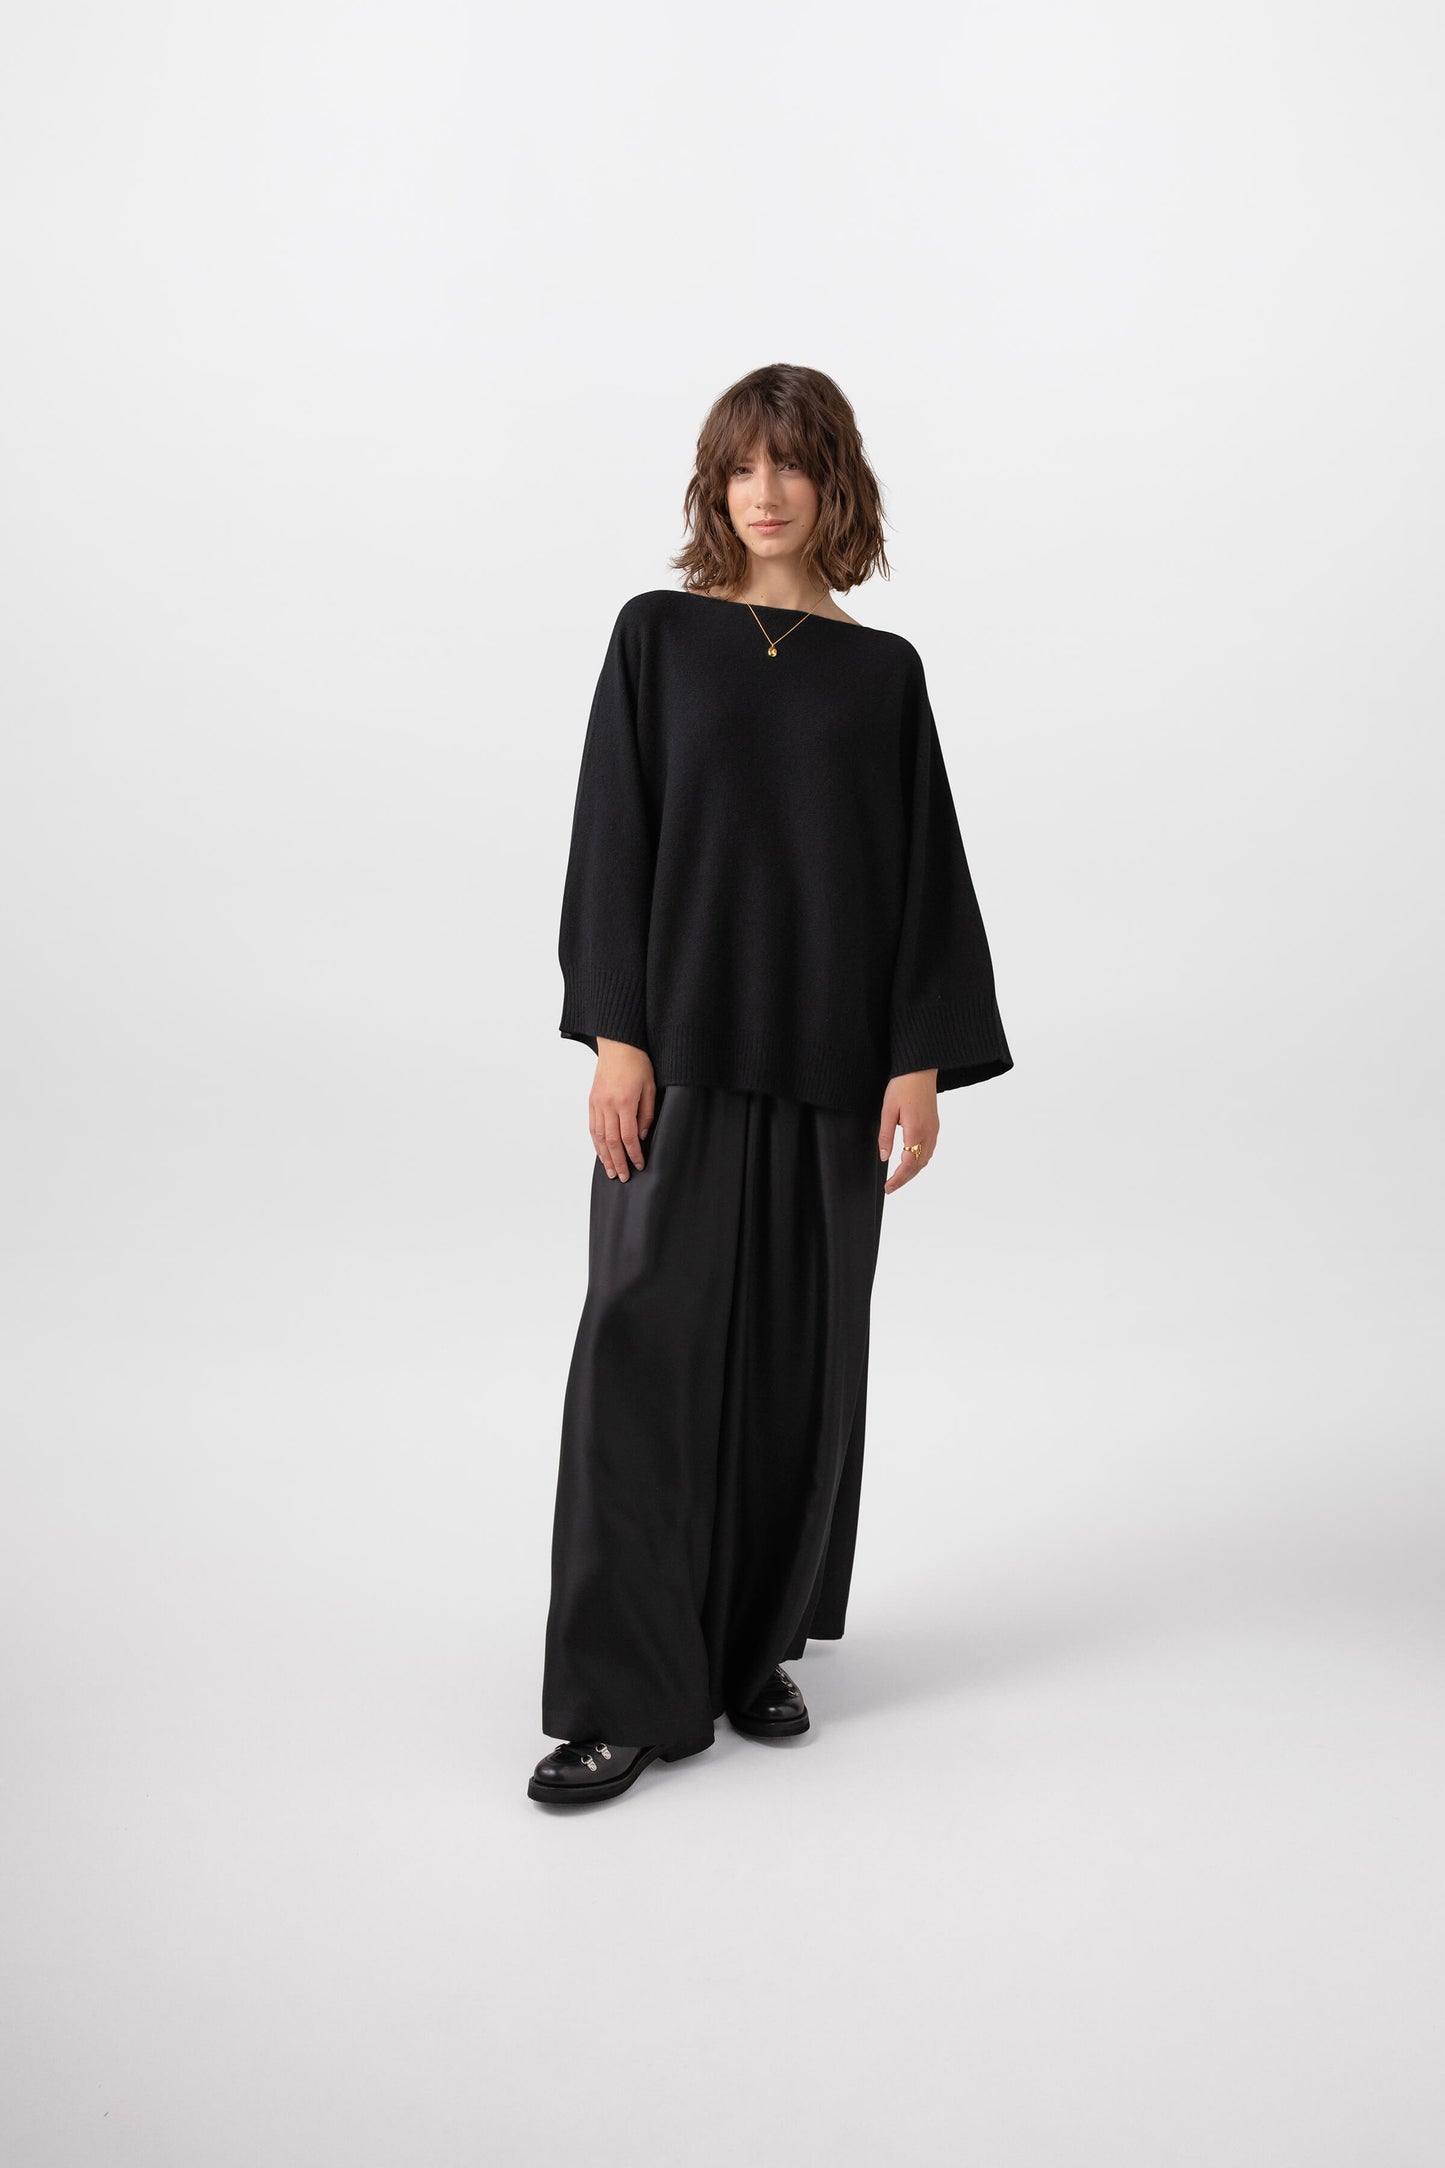 Johnstons of Elgin Womens Knitwear Black Cashmere Cape Sweater KAI05048SA0900